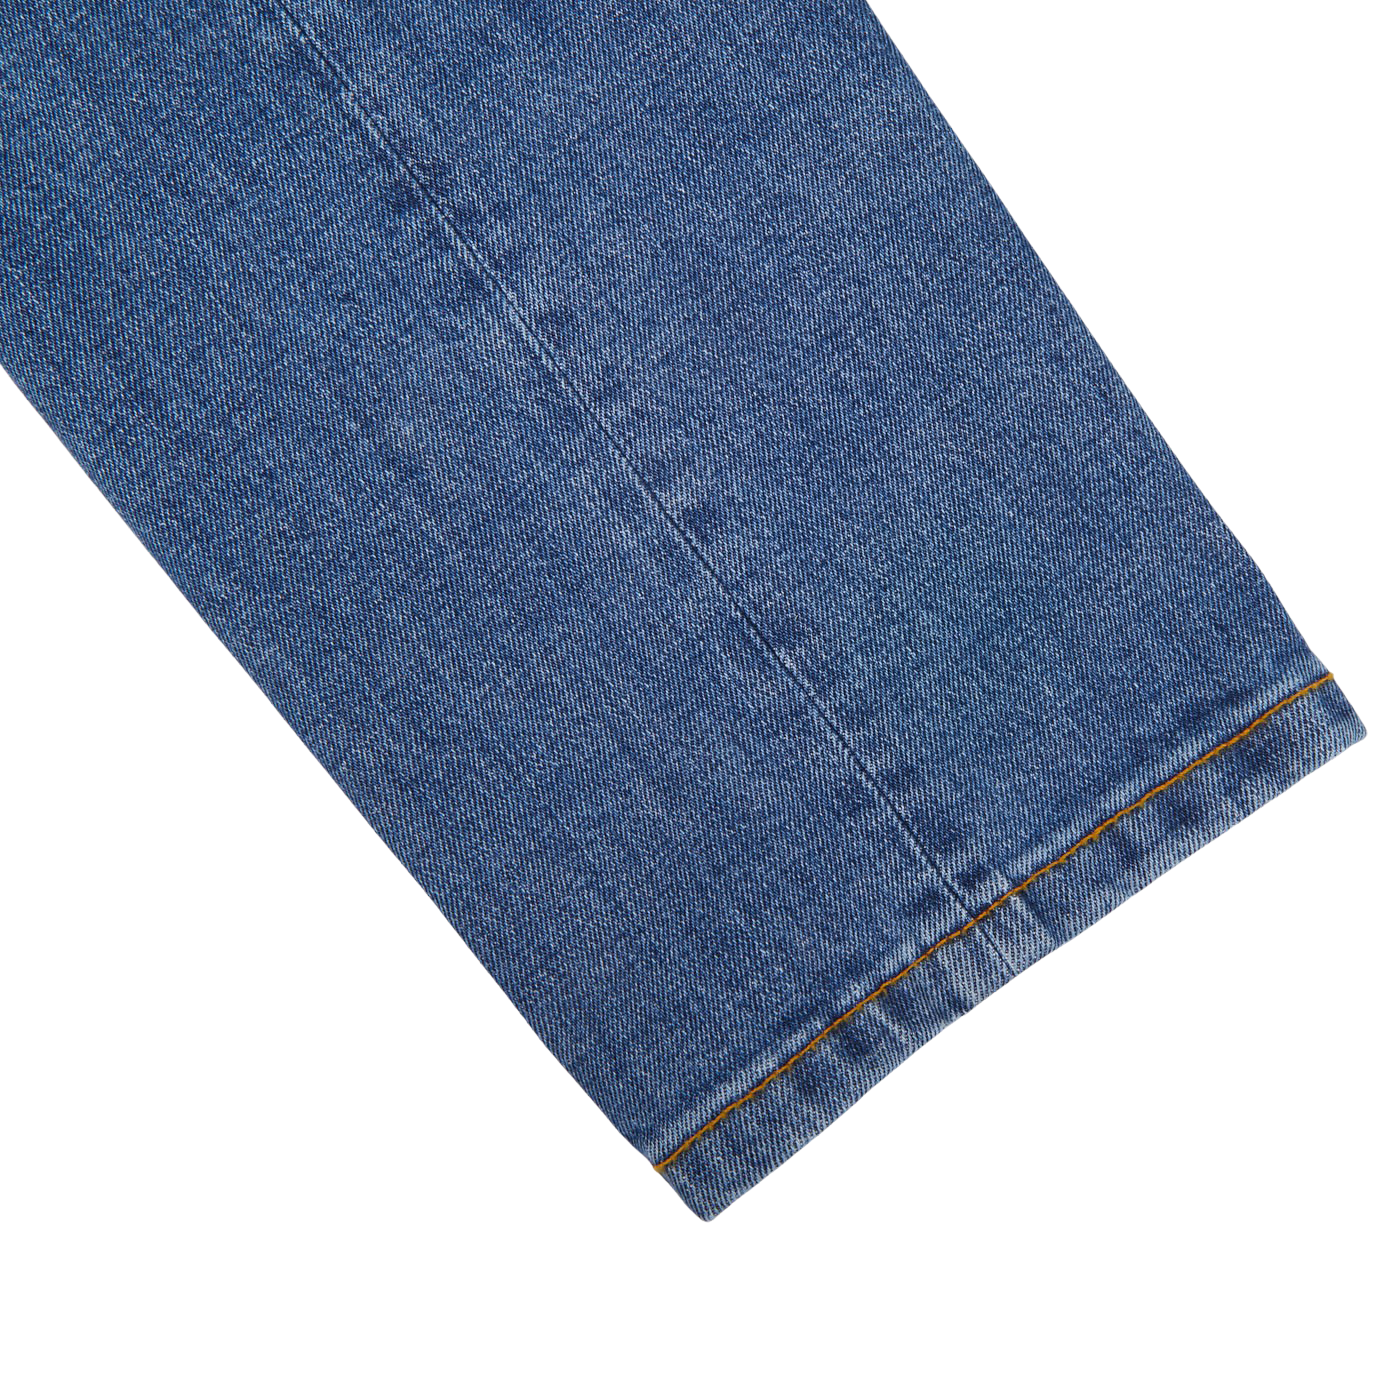 Jeanerica Blue Mid-Vintage Cotton TM005 Jeans Cuff